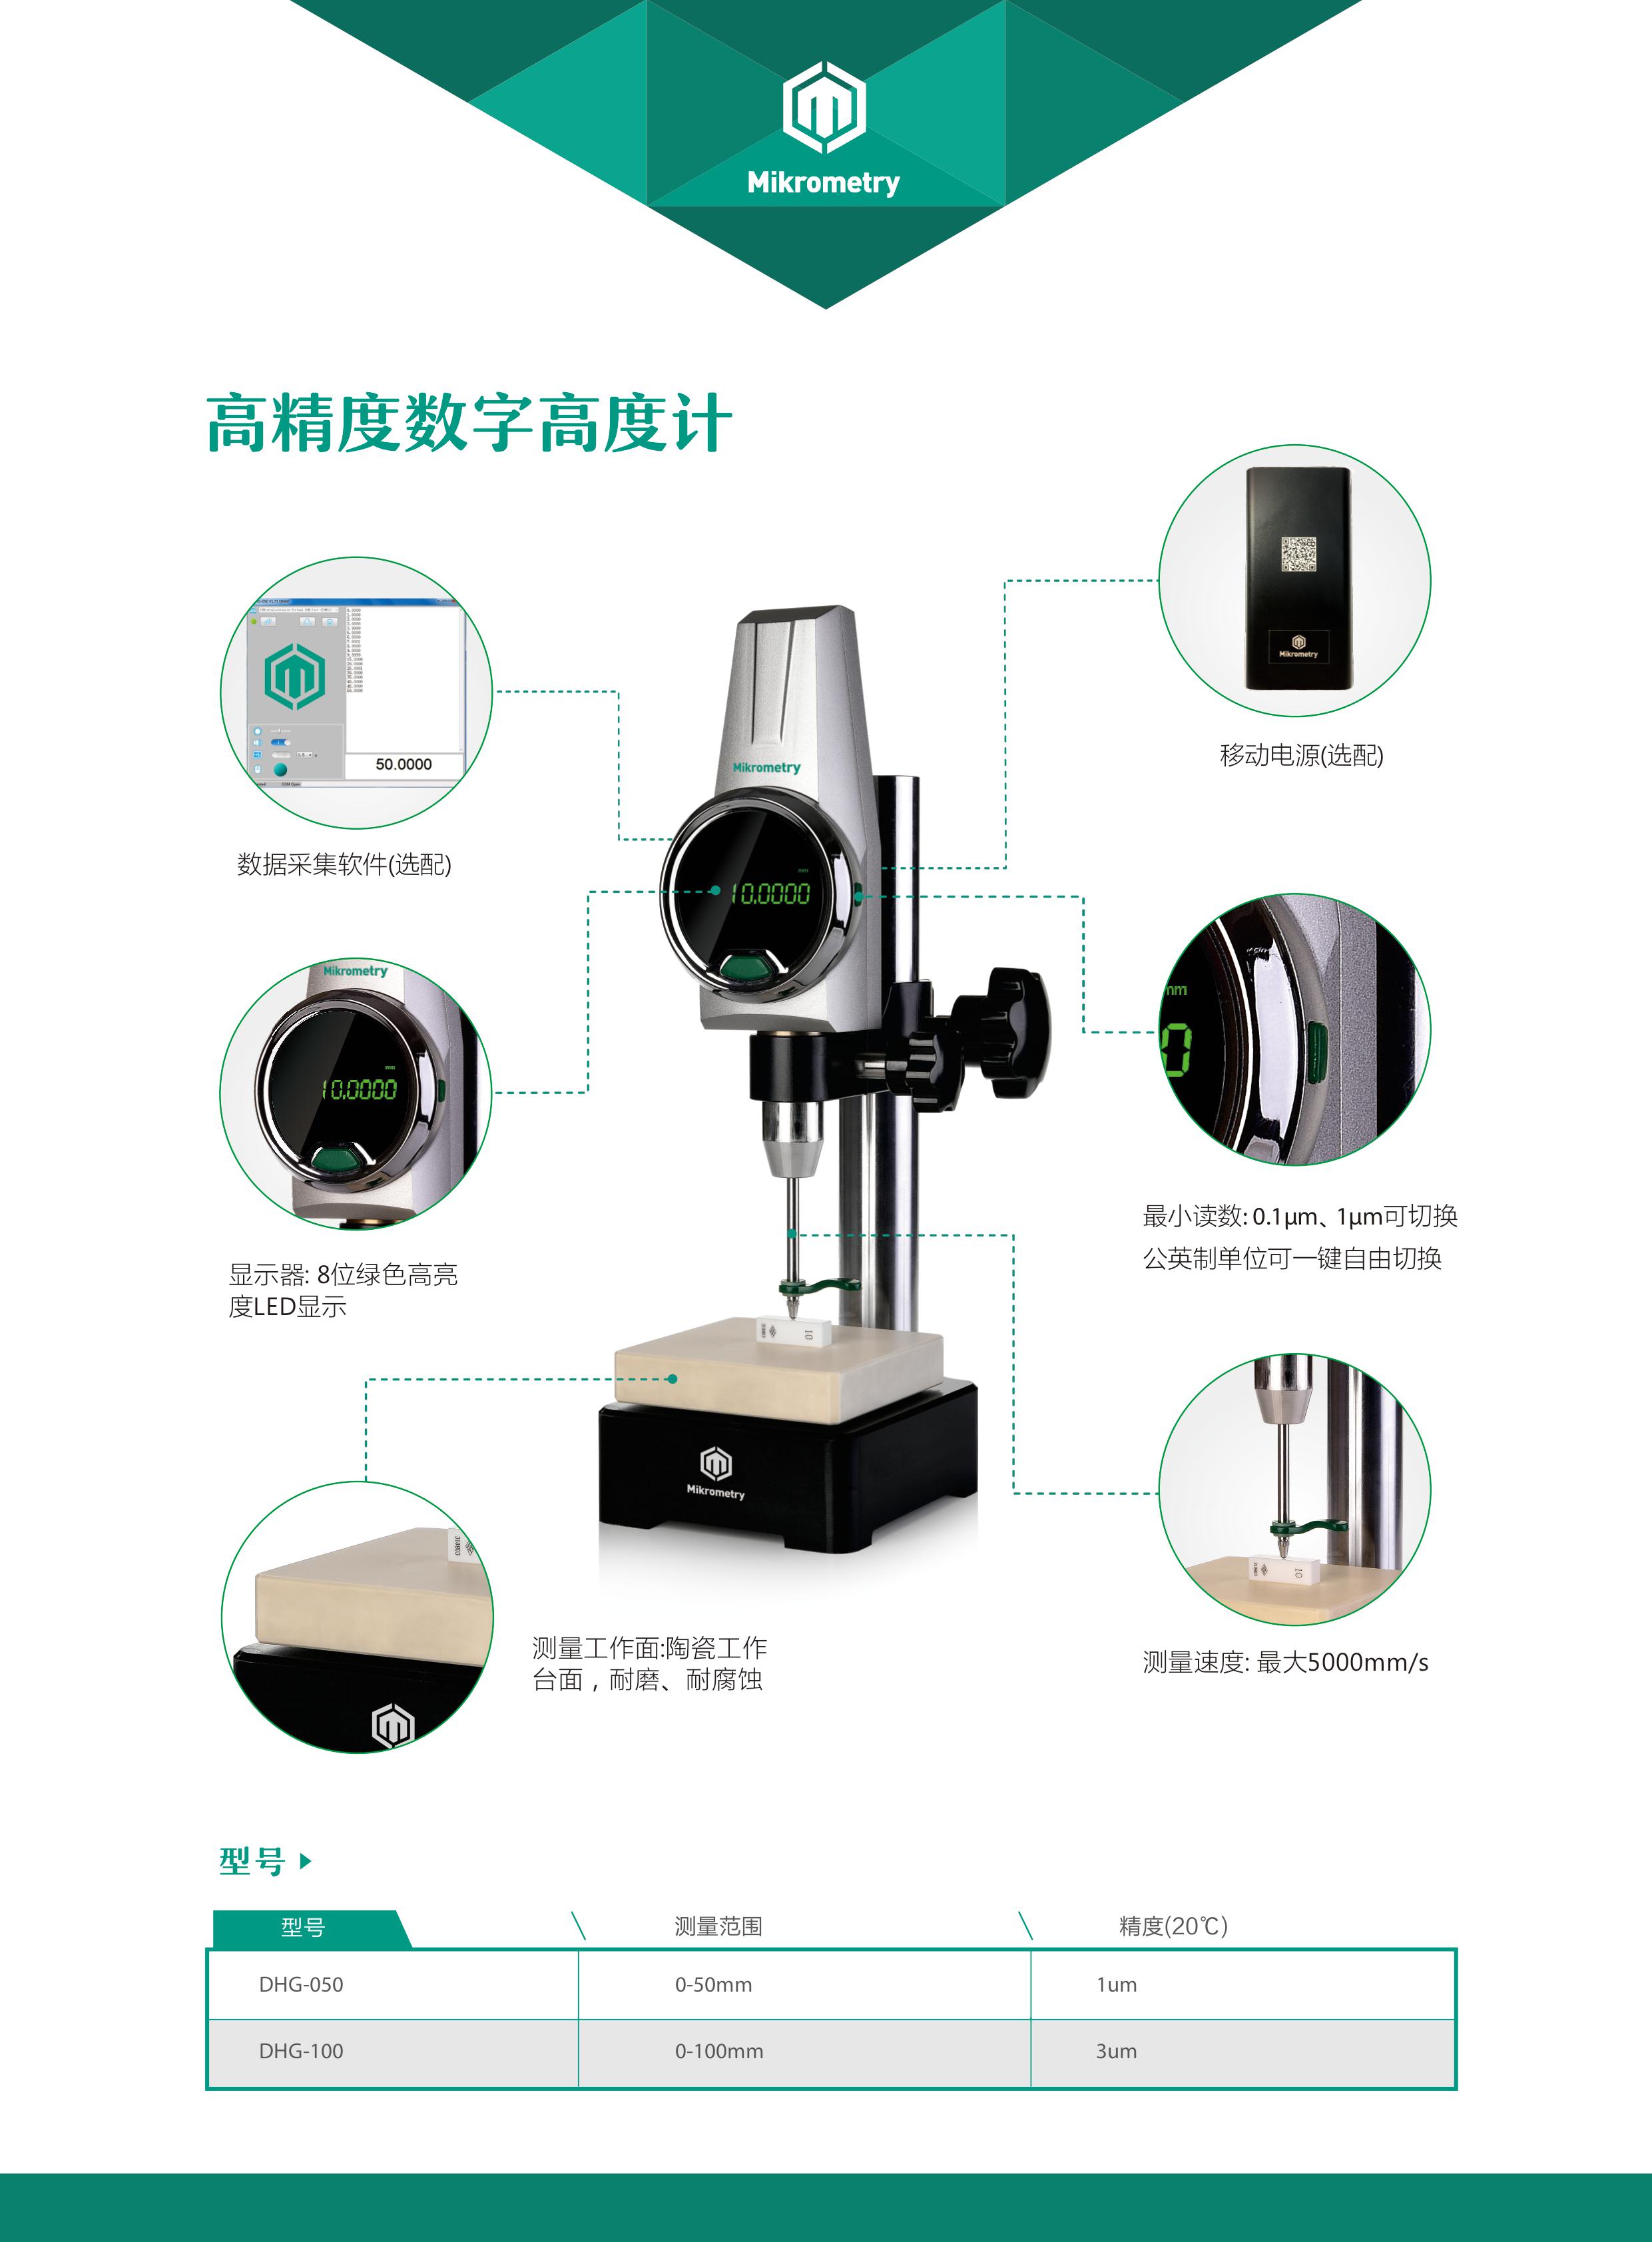 Mikrometry高度规DHG-050,100mm中文版技术资料